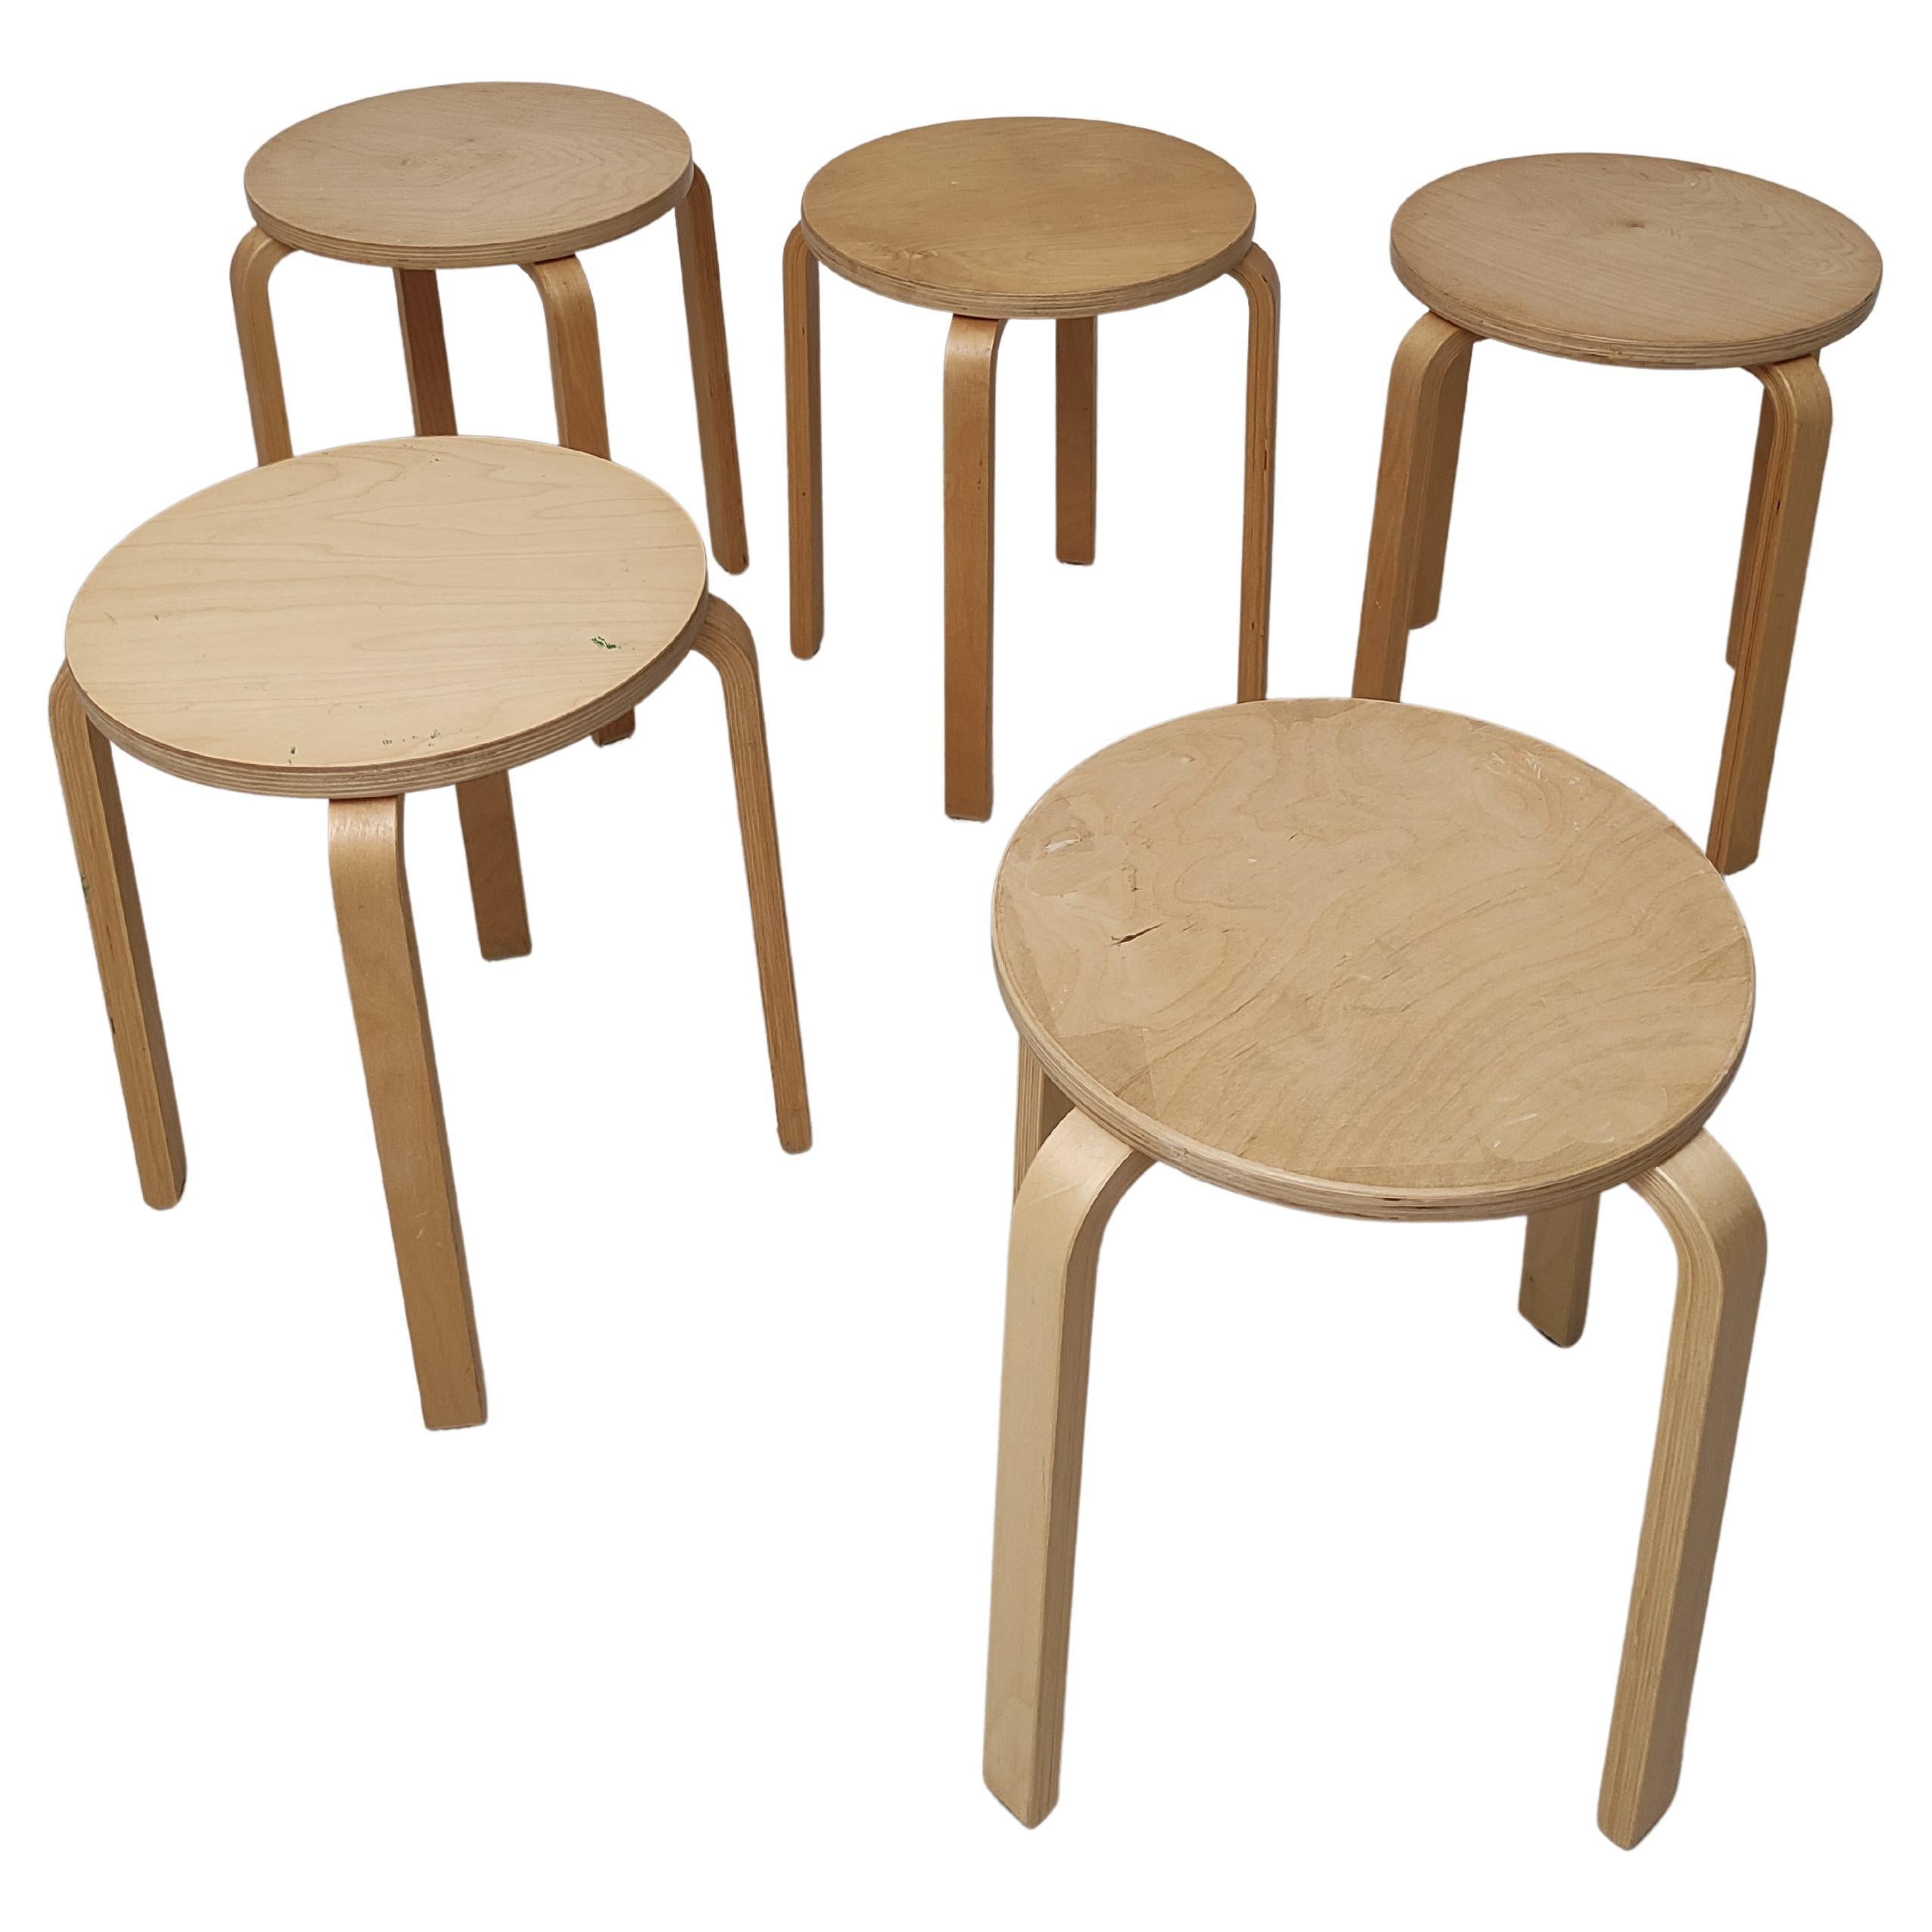 Ikea Alvar Aalto stools  For Sale